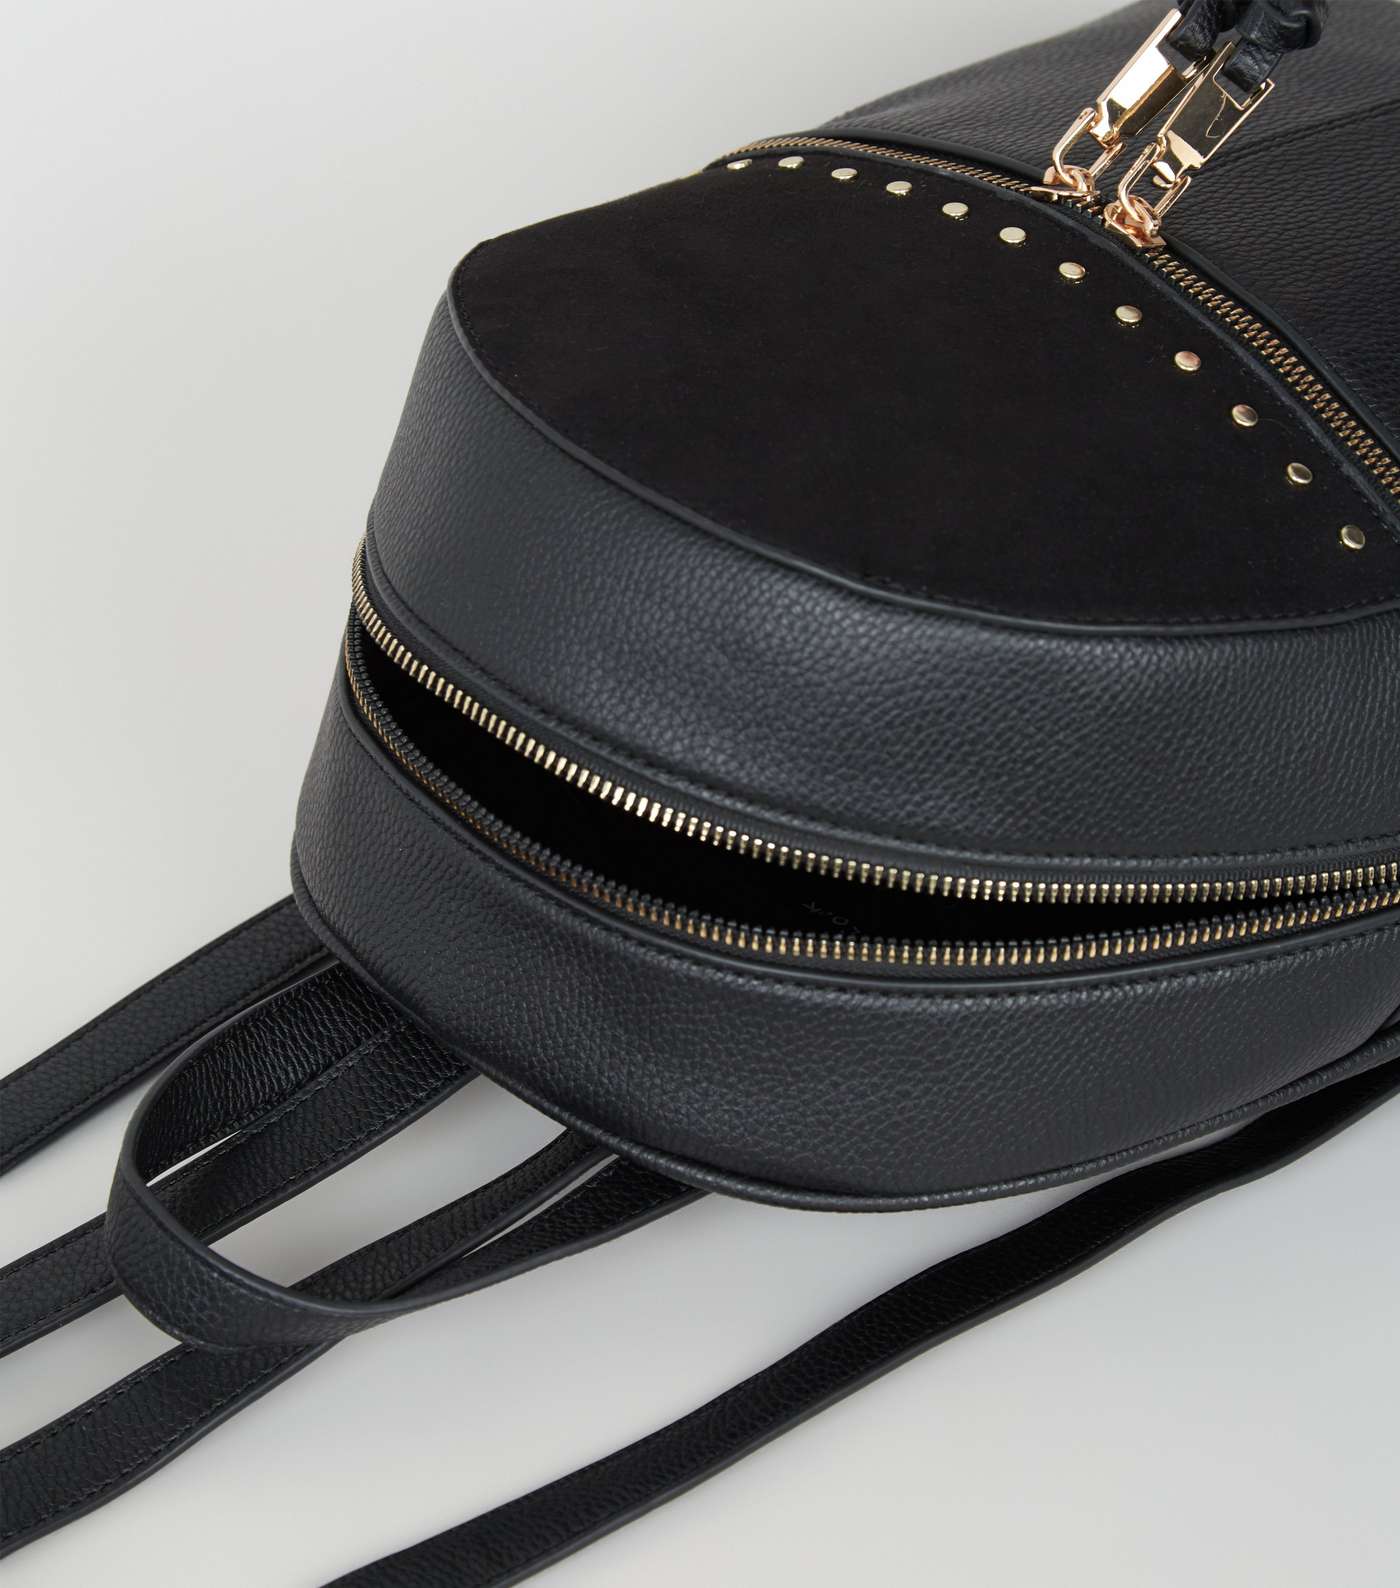 Black Leather-Look Studded Backpack Image 3